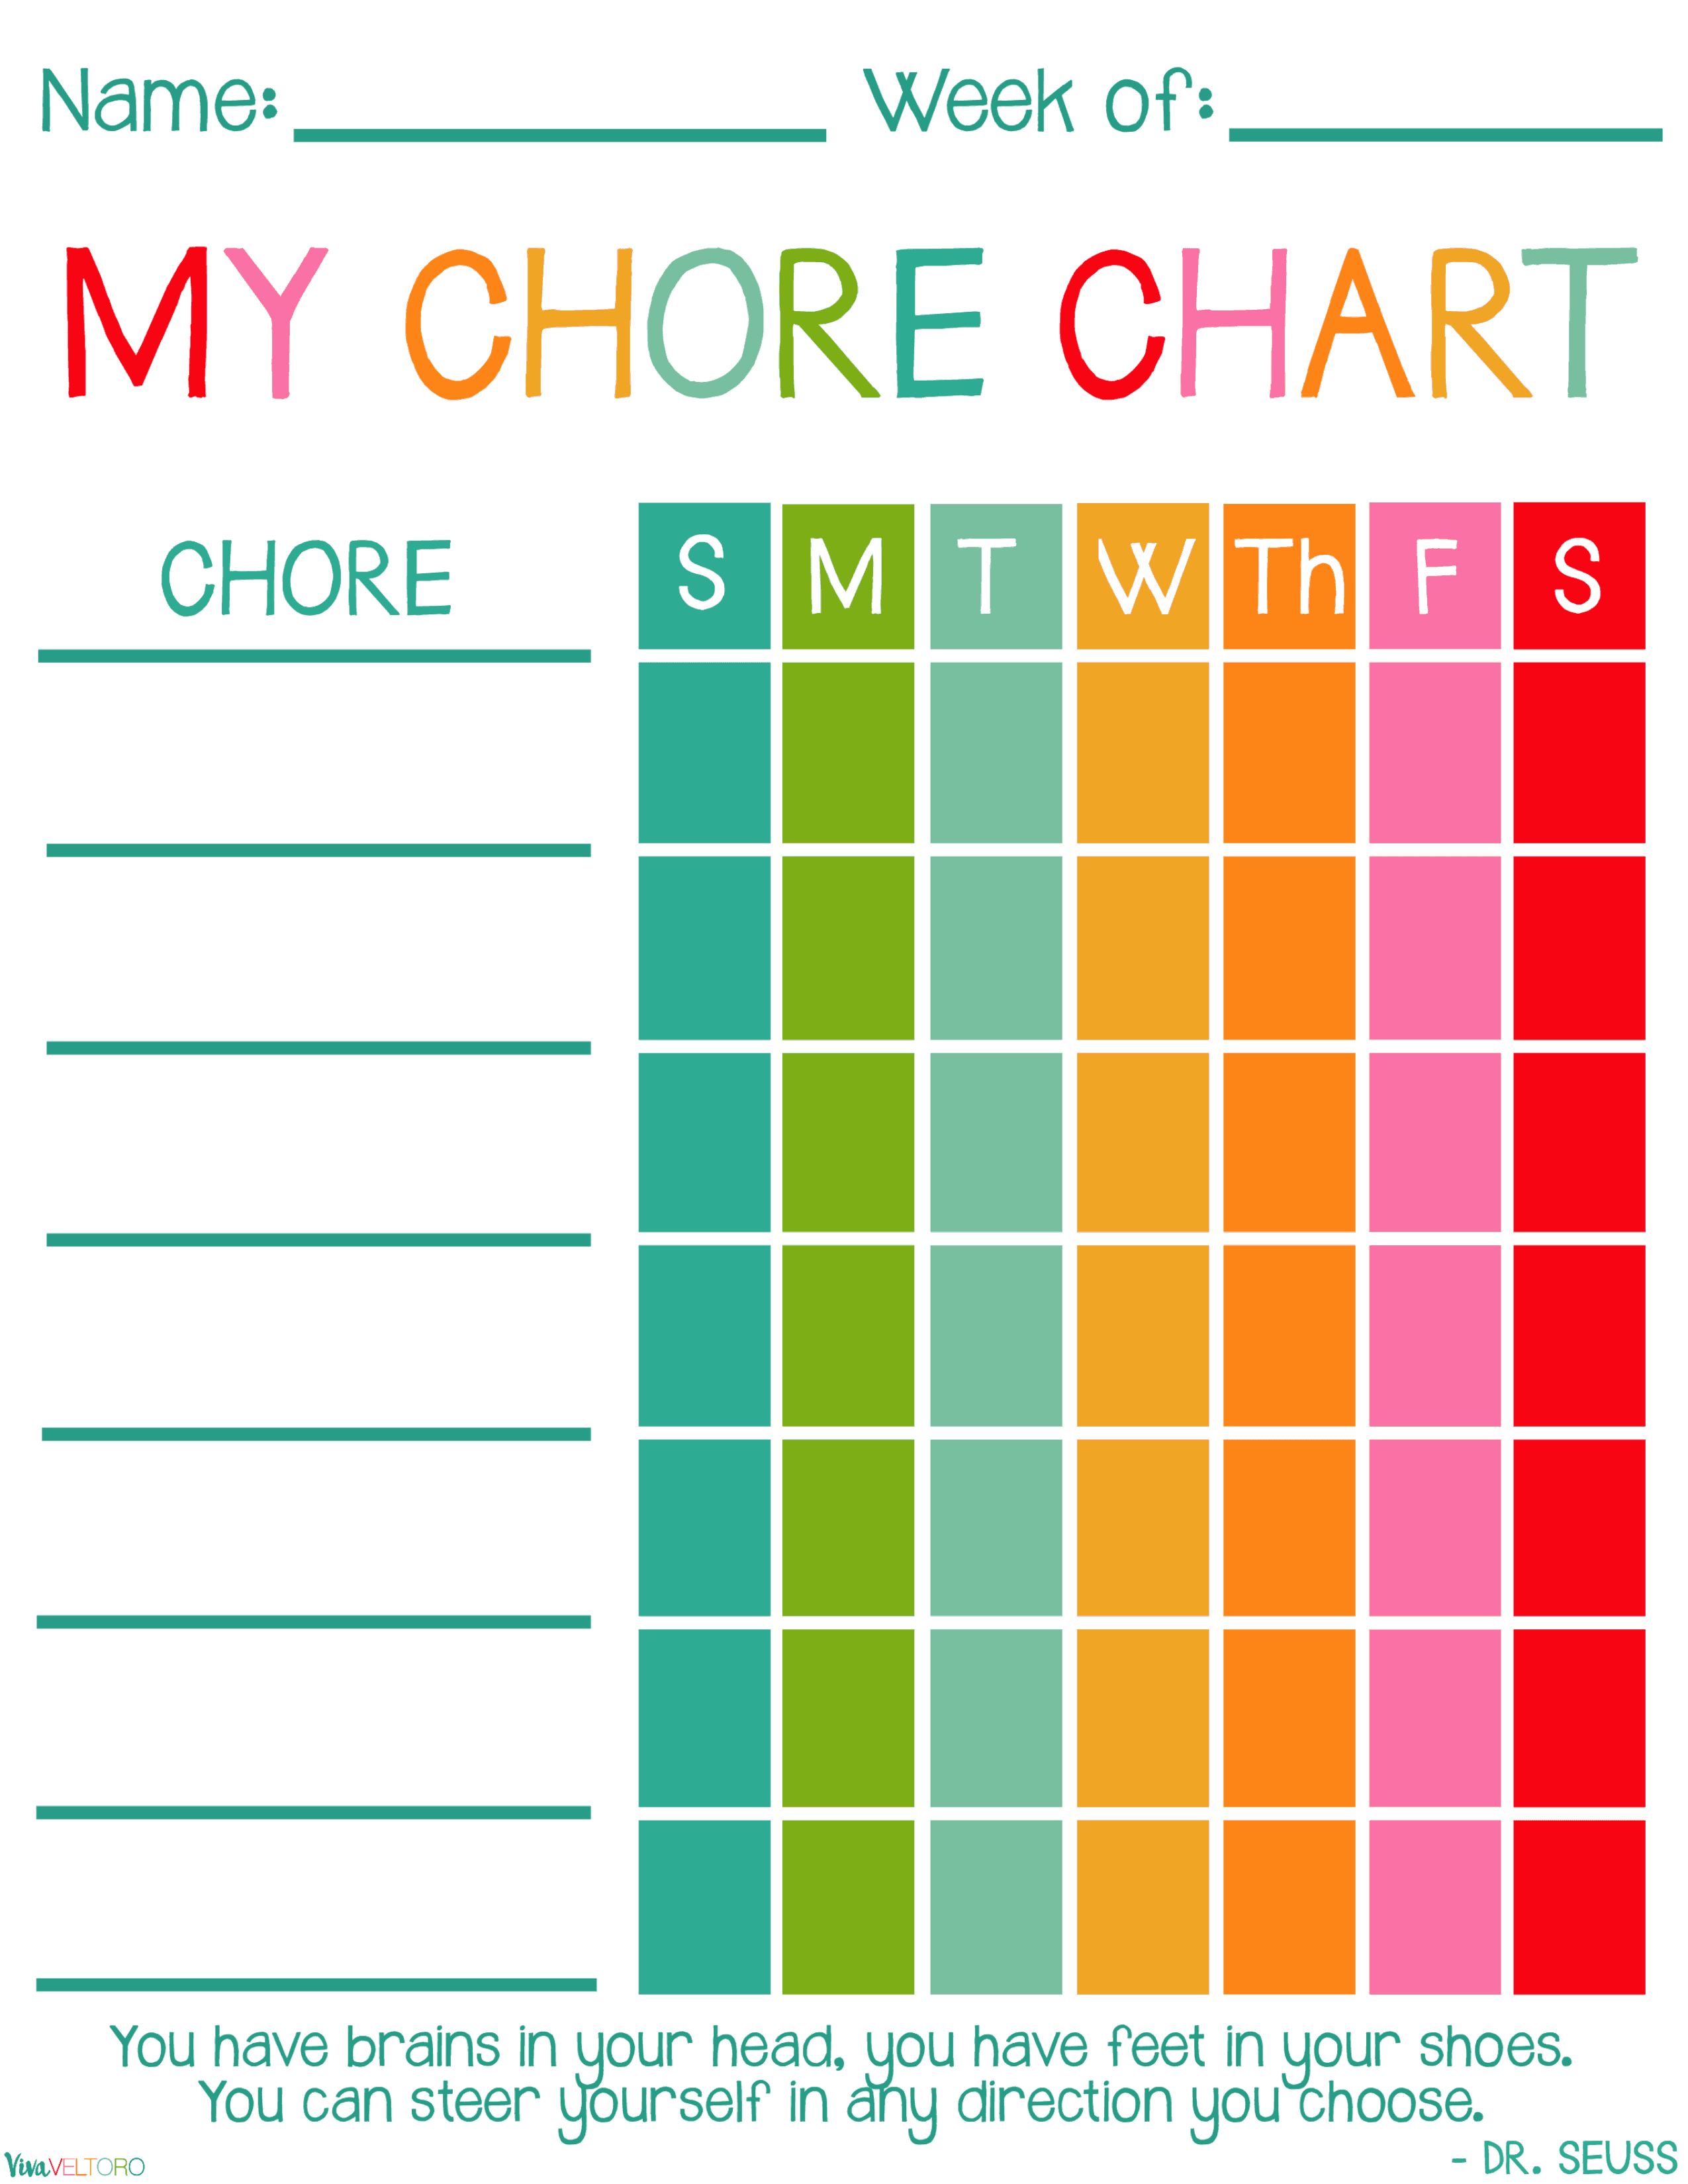 Childrens Chore Chart Printable Free Printable Templates